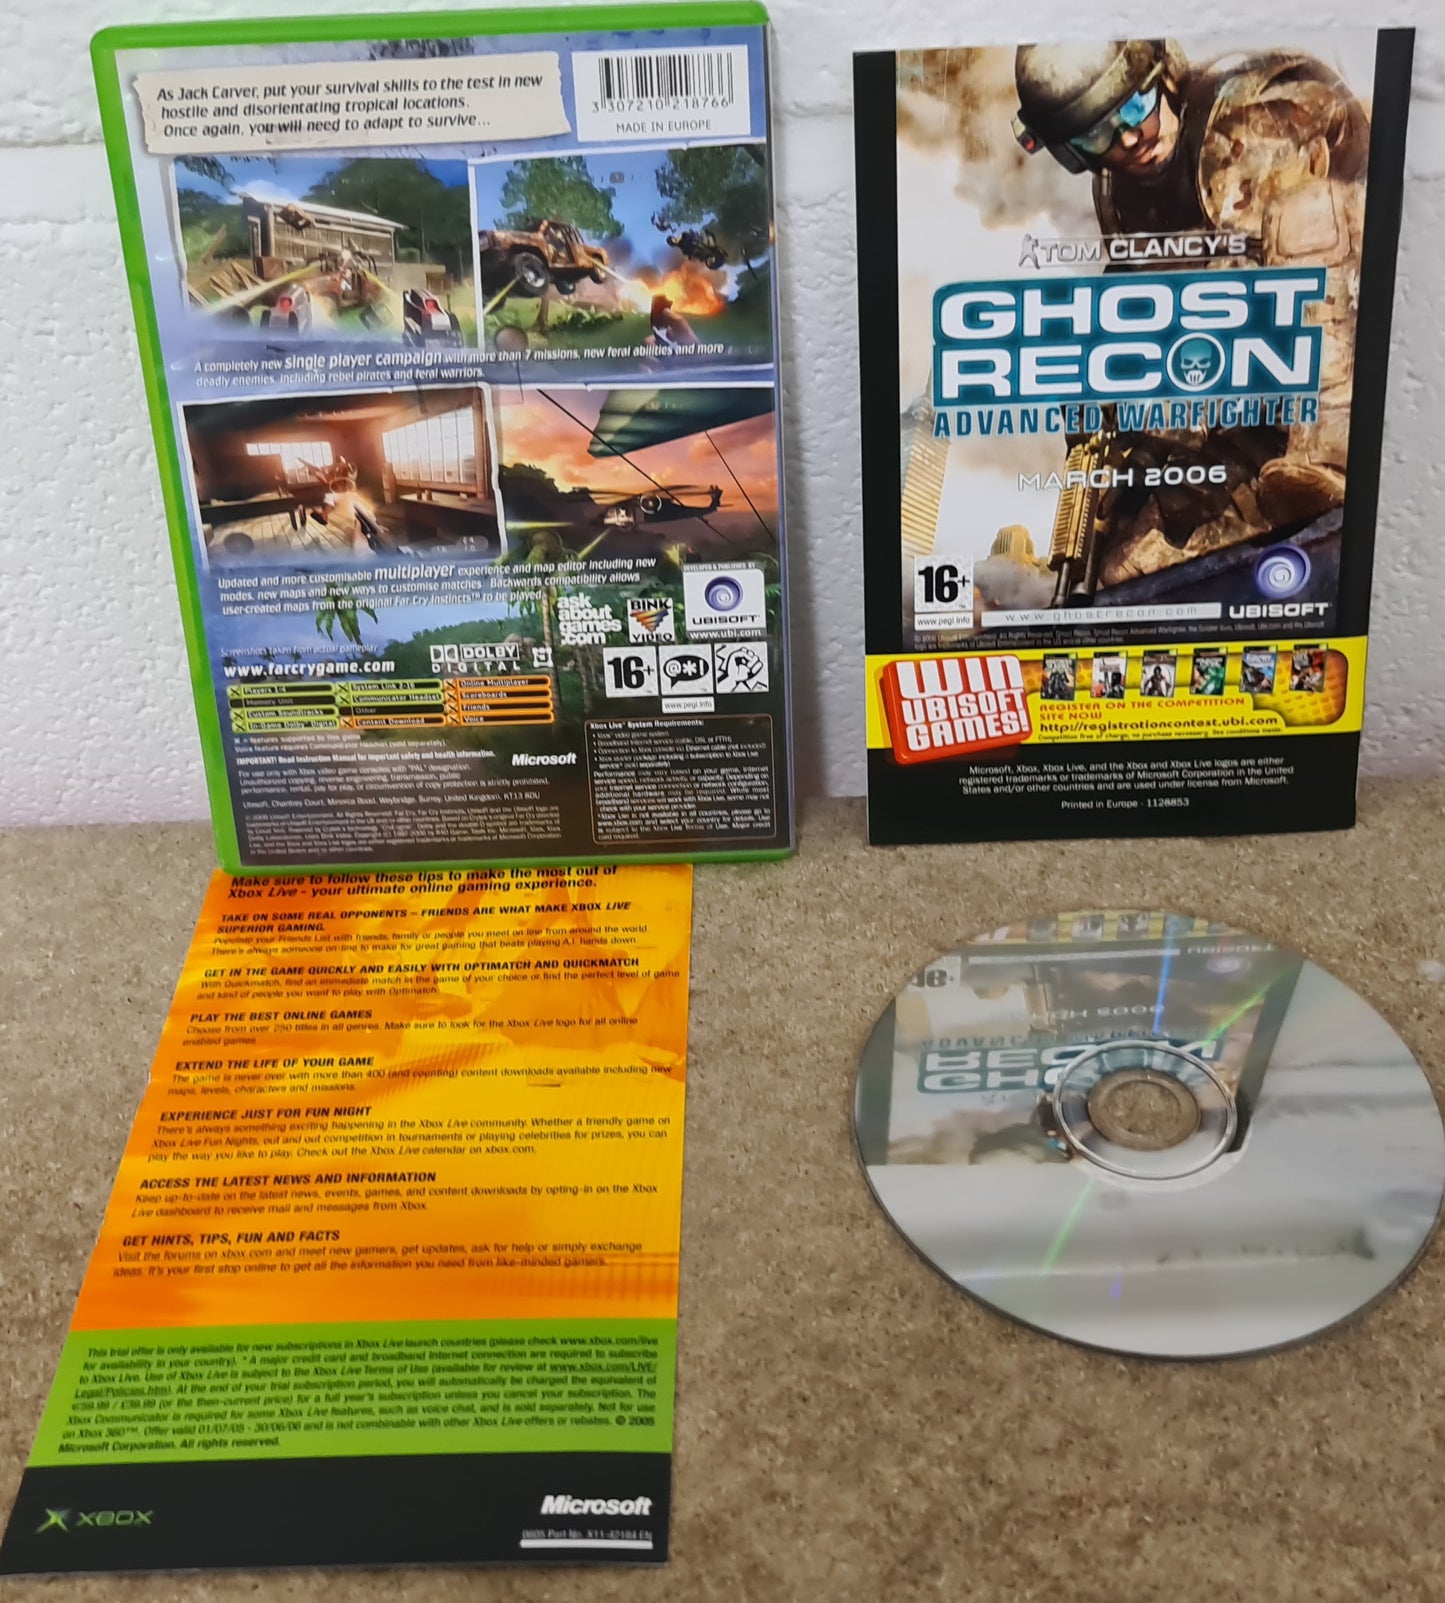 Far Cry Instincts Evolution Microsoft Xbox Game